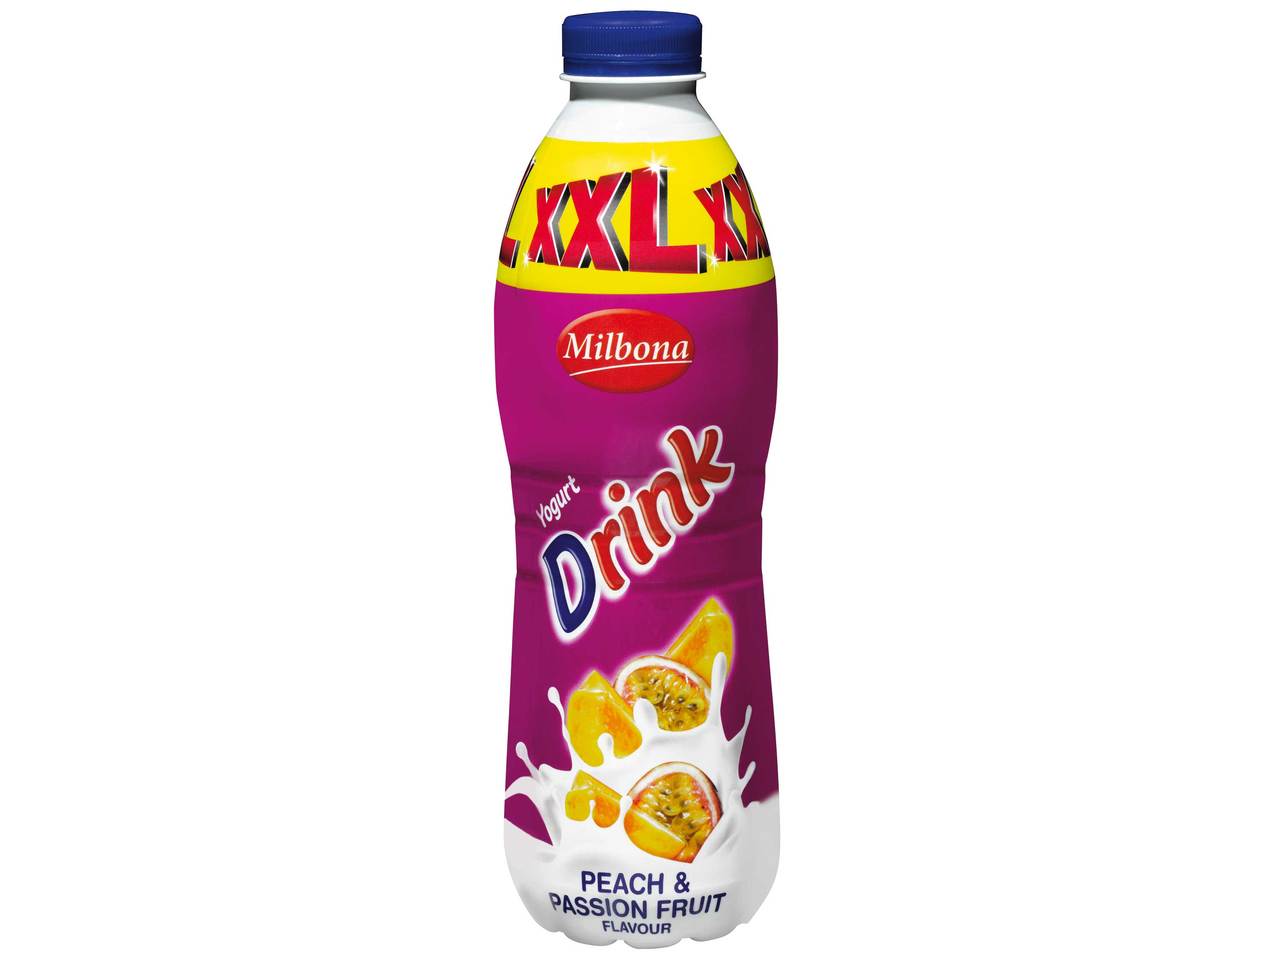 Drinkyoghurt